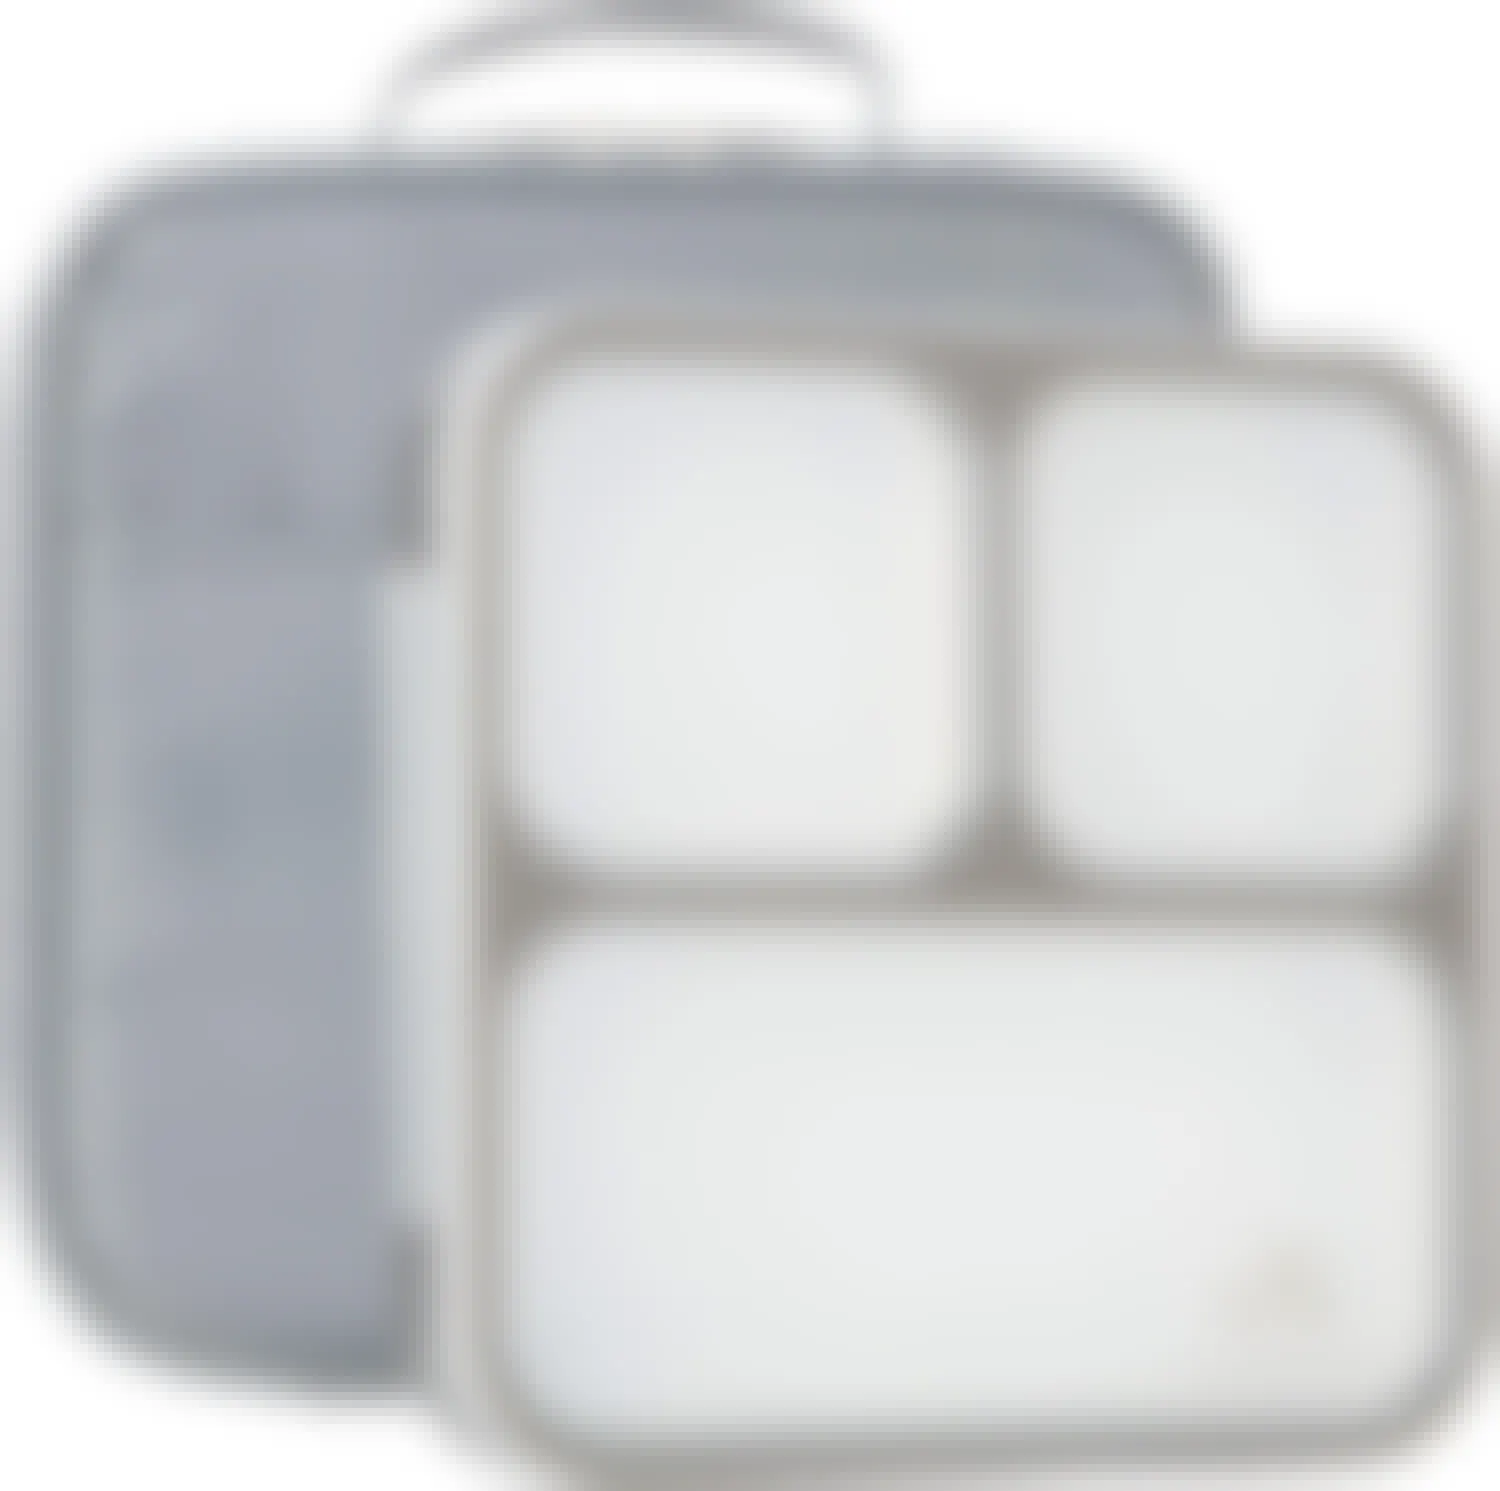 A Modetro Sports' Flat Bento Box on a white background